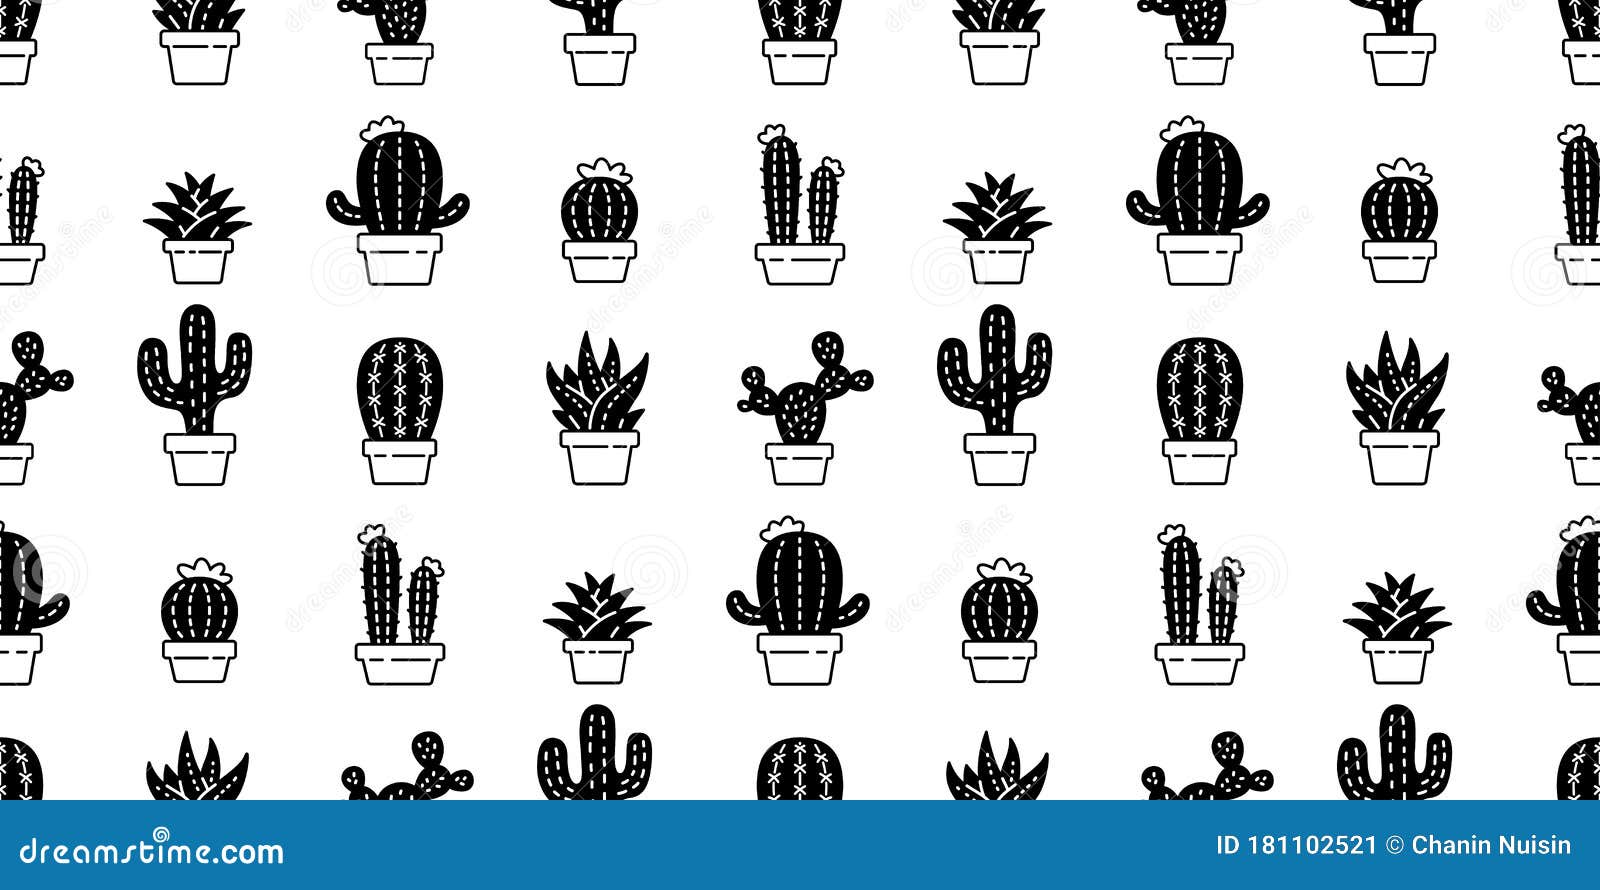 cactus seamless pattern  desert botanica flower garden plant cartoon tile background repeat wallpaper scarf  doodle